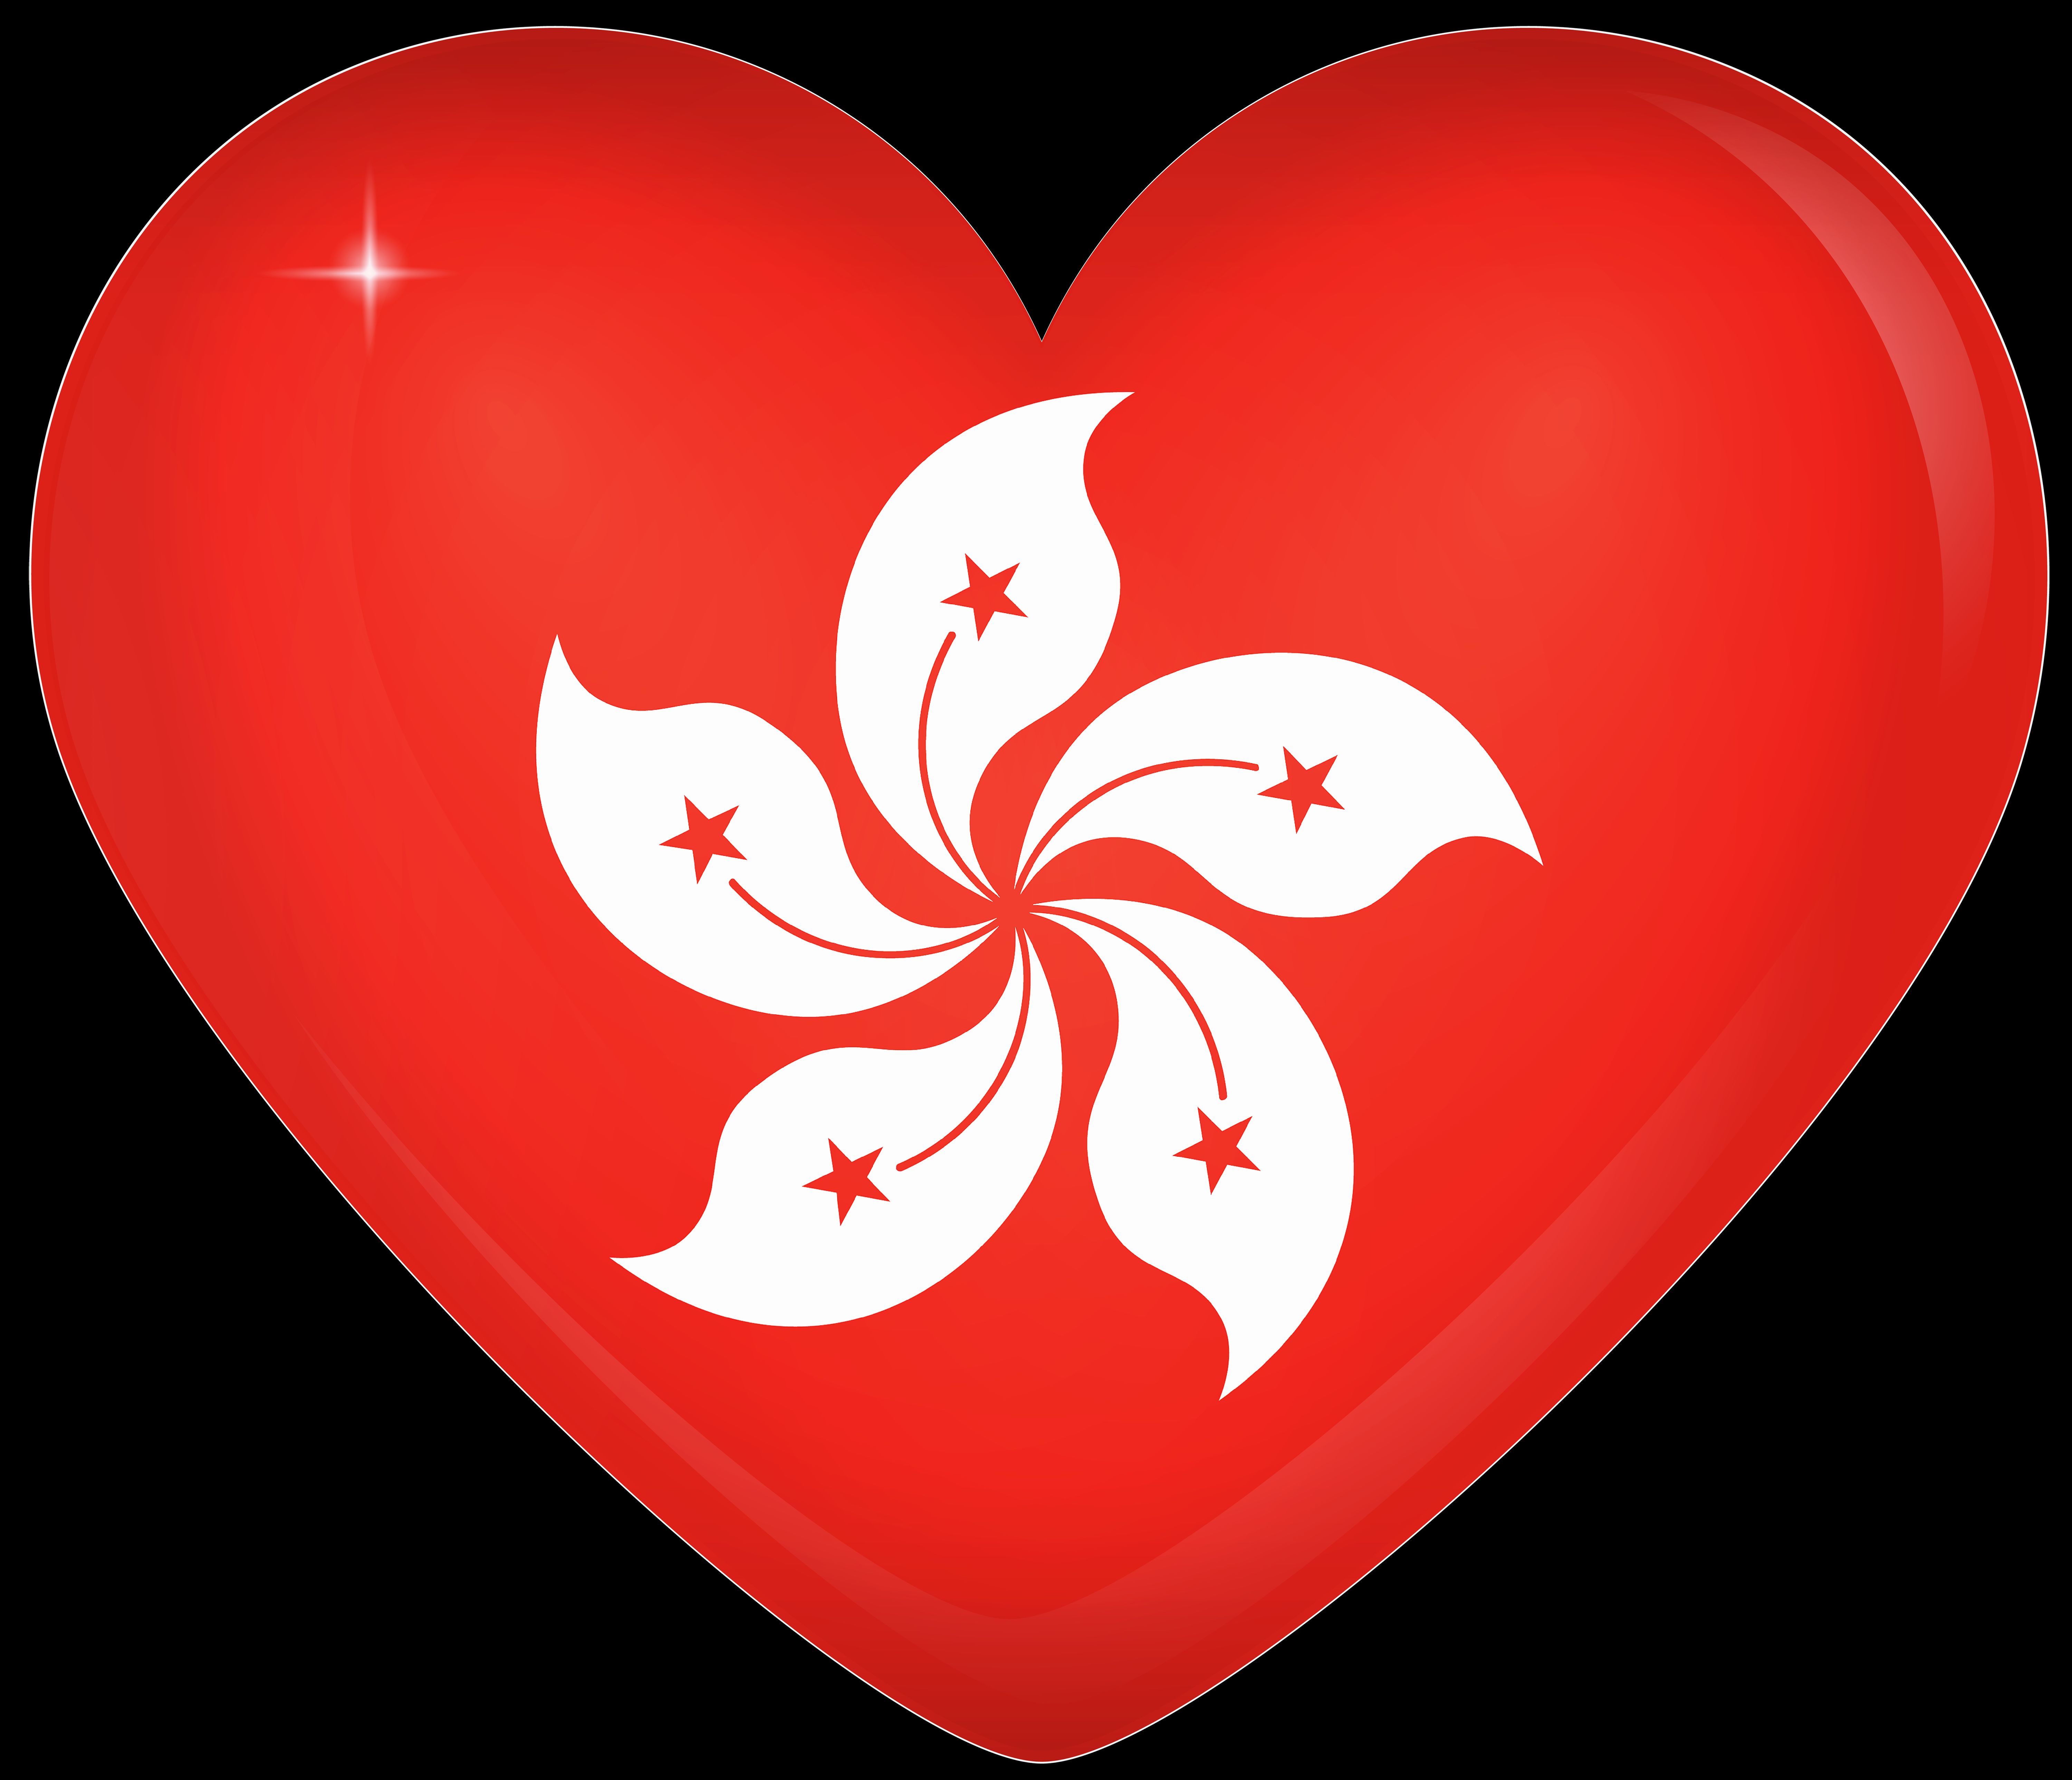 Descarga gratuita de fondo de pantalla para móvil de Banderas, Corazón, Bandera, Miscelaneo, Bandera De Hong Kong.